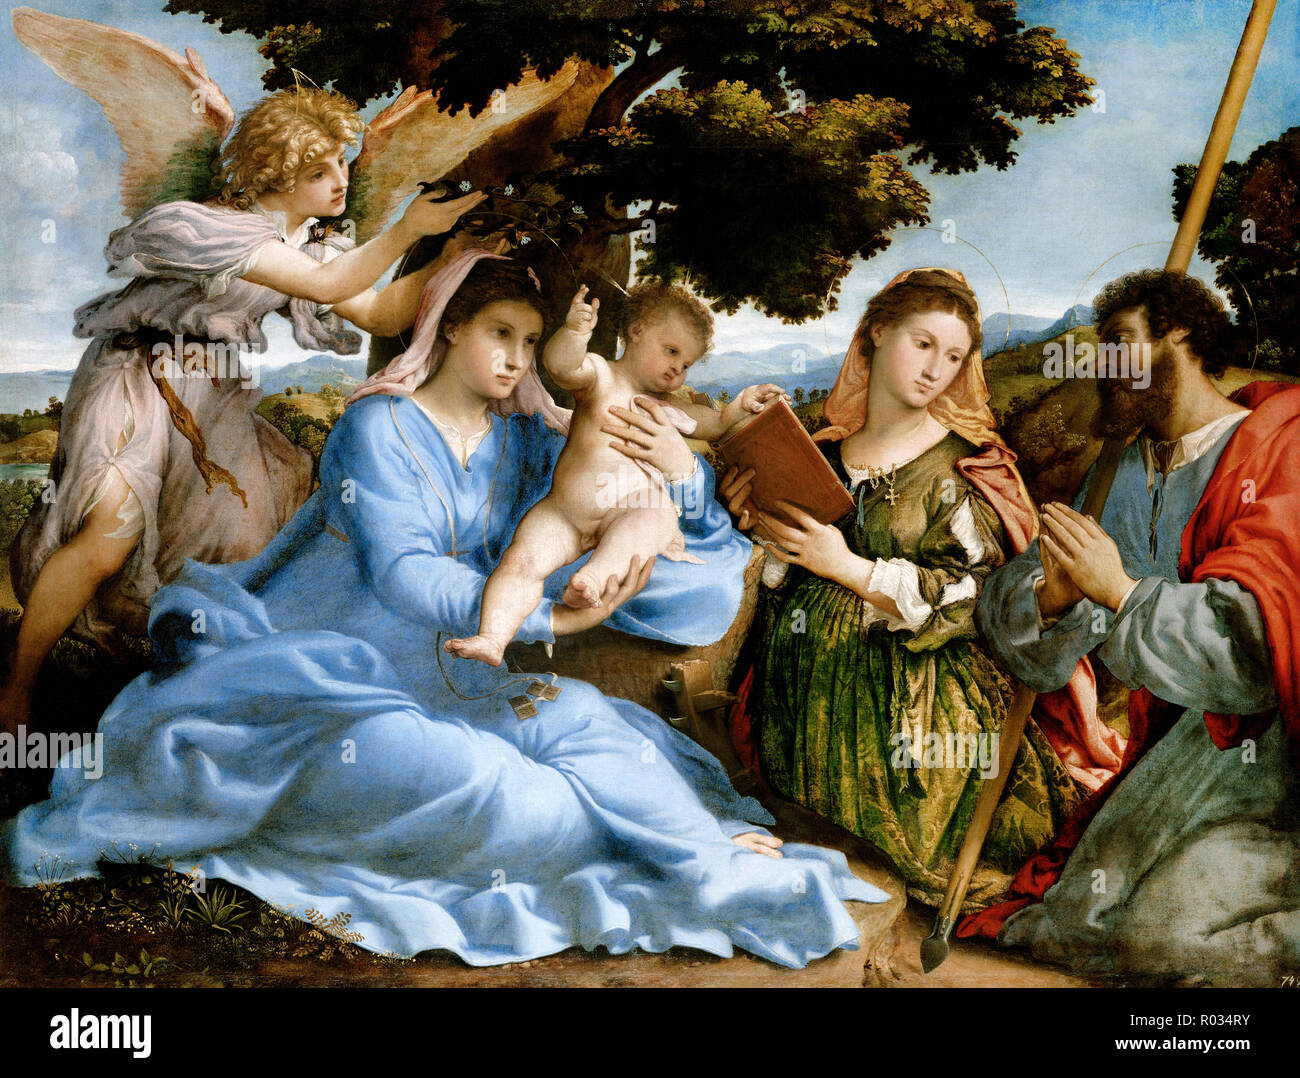 Lorenzo Lotto, Madonna and Child with Saints Catherine and Thomas, Sacra Conversazione, Circa 1527-1533, Oil on canvas, Kunsthistorisches Museum, Vienna, Austria. Stock Photo